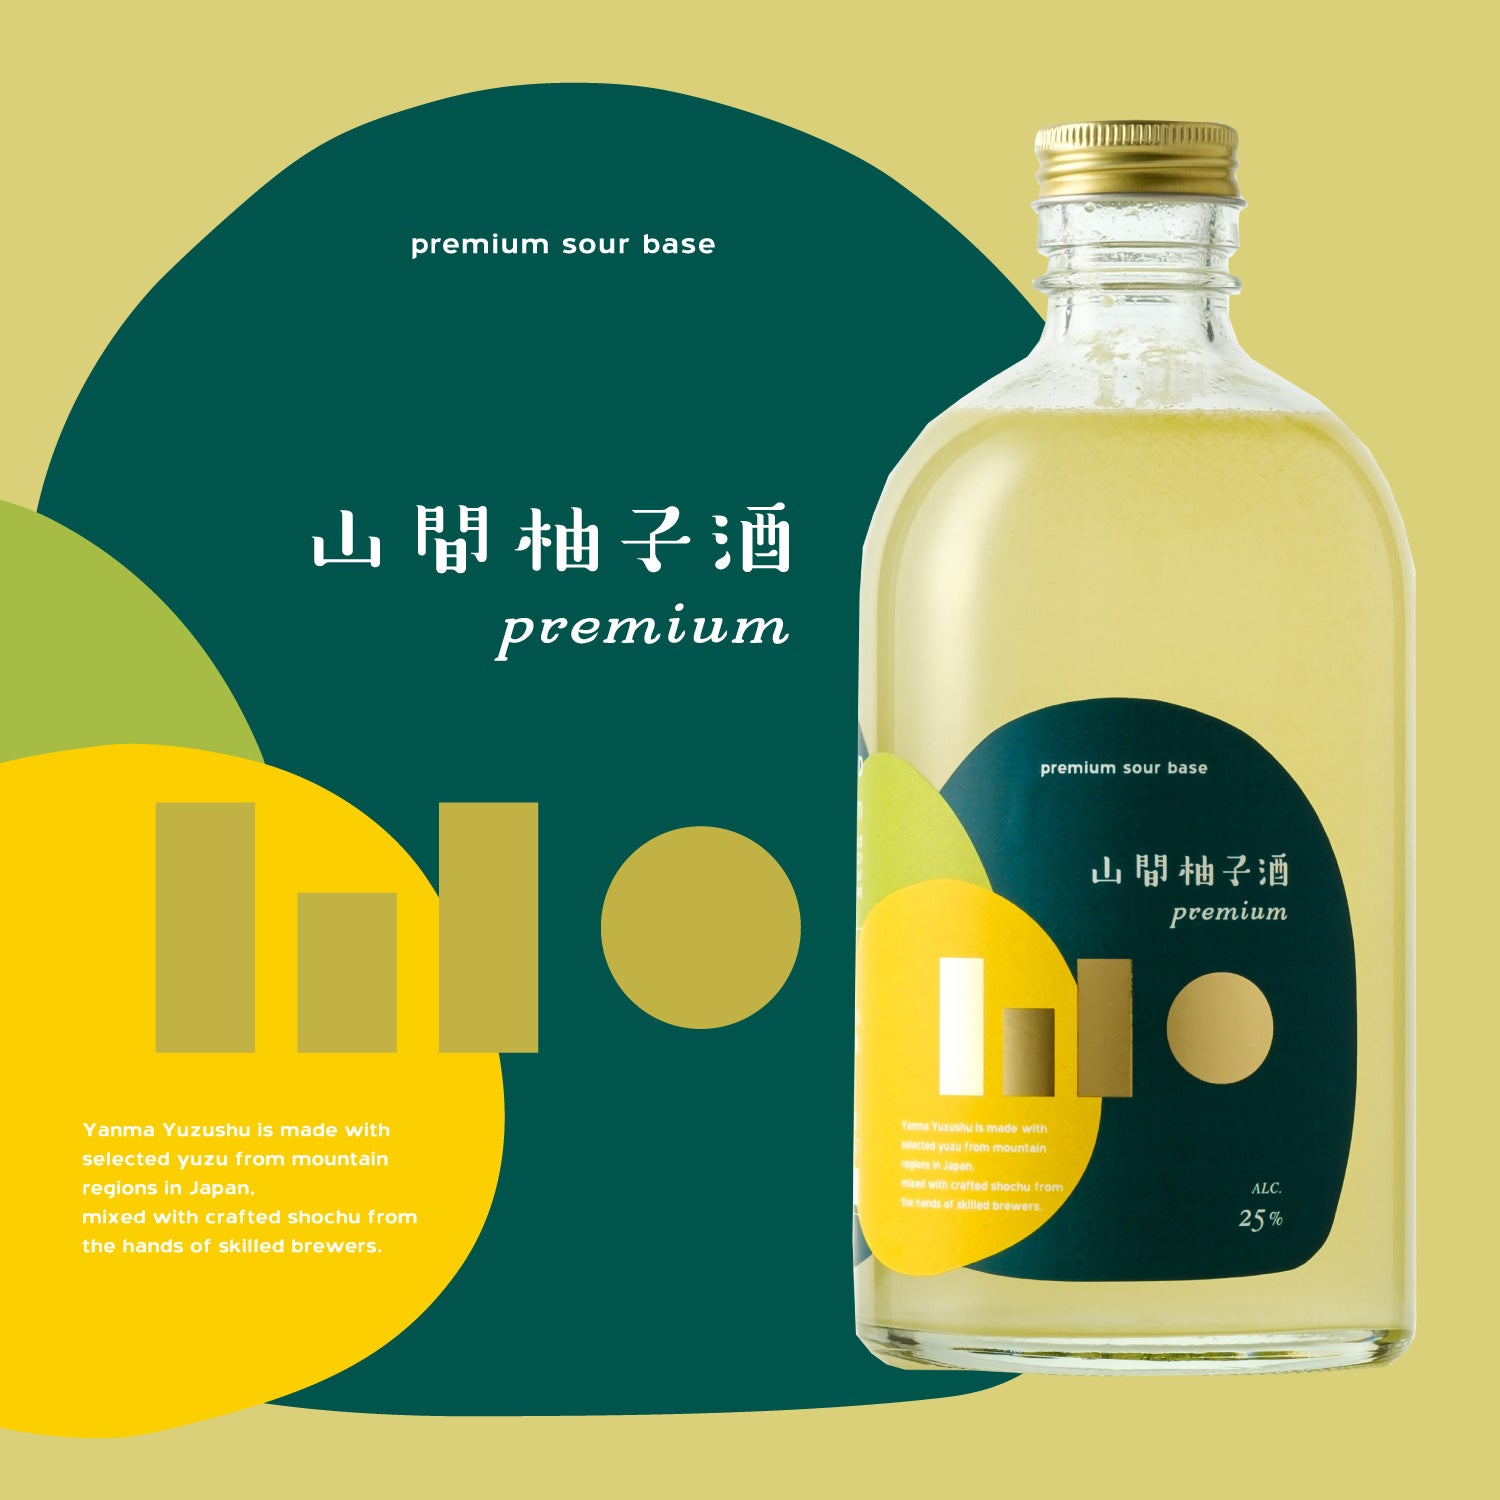 山間柚子酒 premium